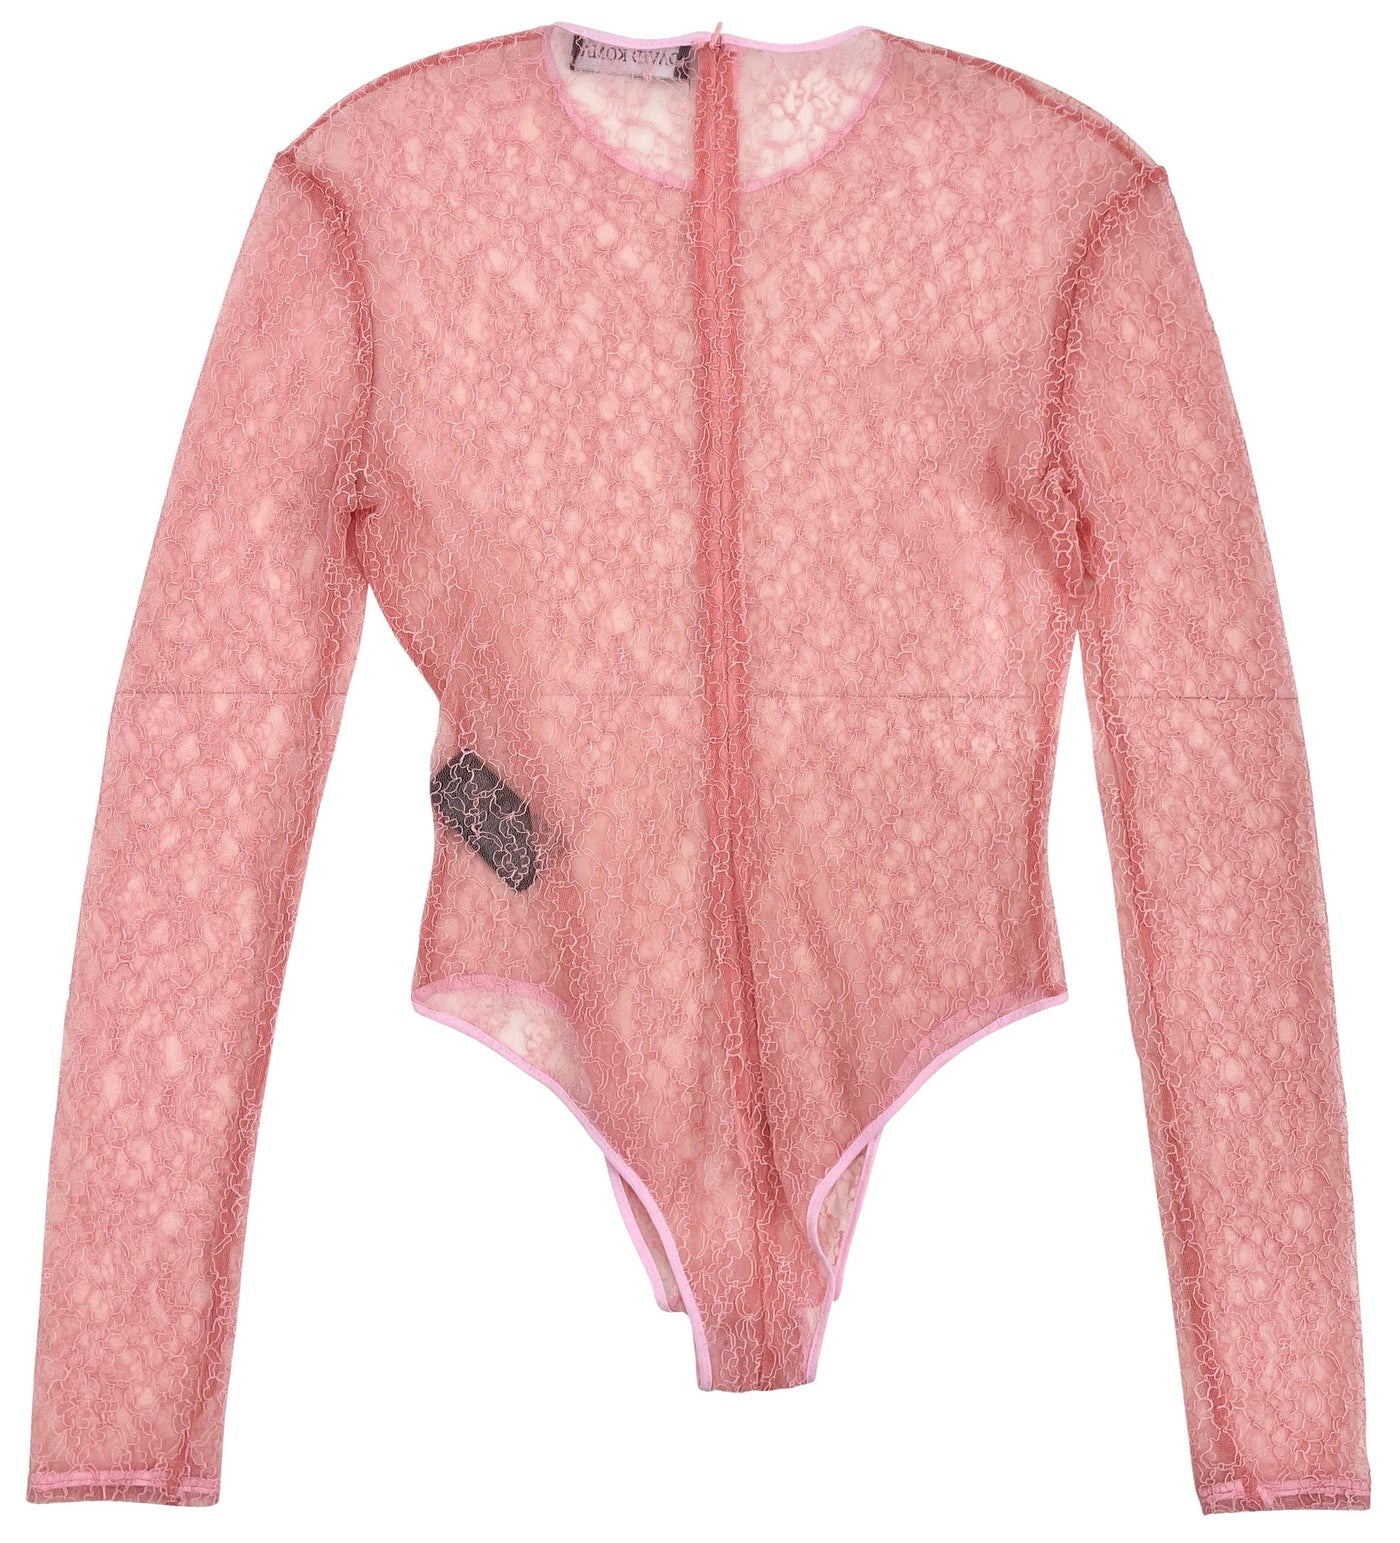 David Koma Long Sleeve Lace Bodysuit in Pink - Discounts on David Koma at UAL